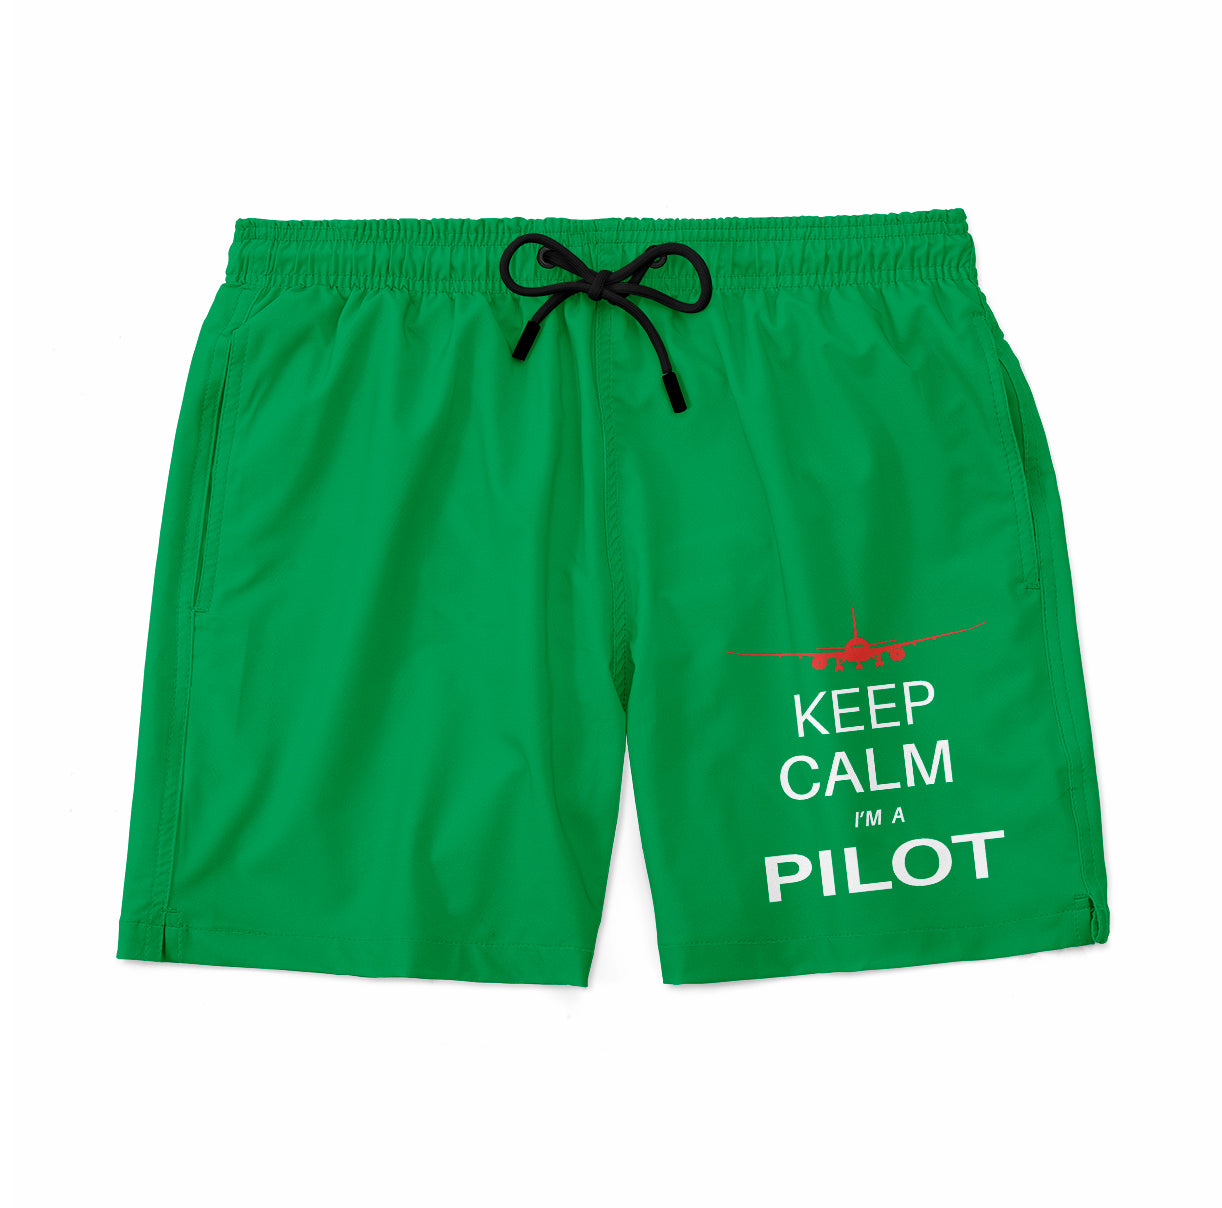 Pilot (777 Silhouette) Designed Swim Trunks & Shorts